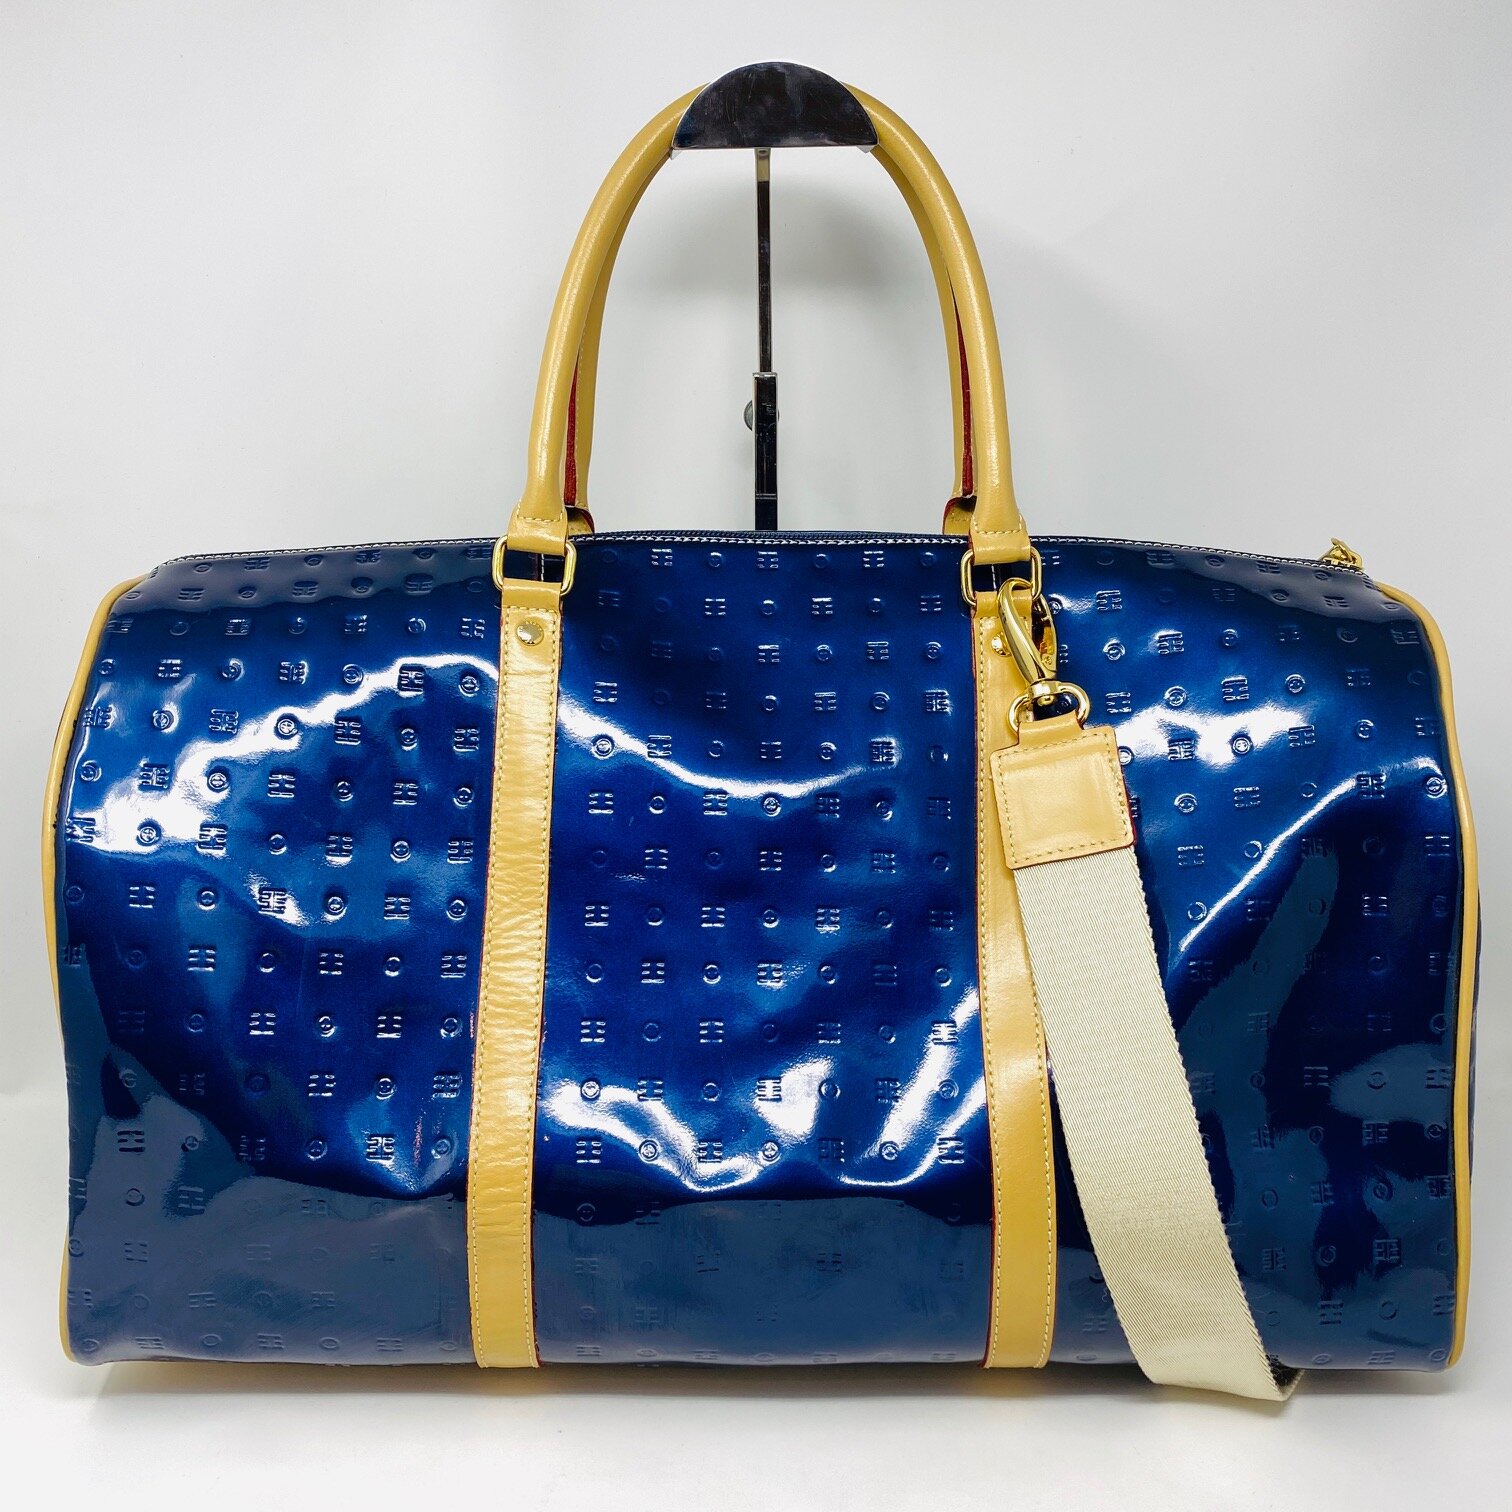 Shopper finds 'legit' Louis Vuitton bag in thrift store expecting